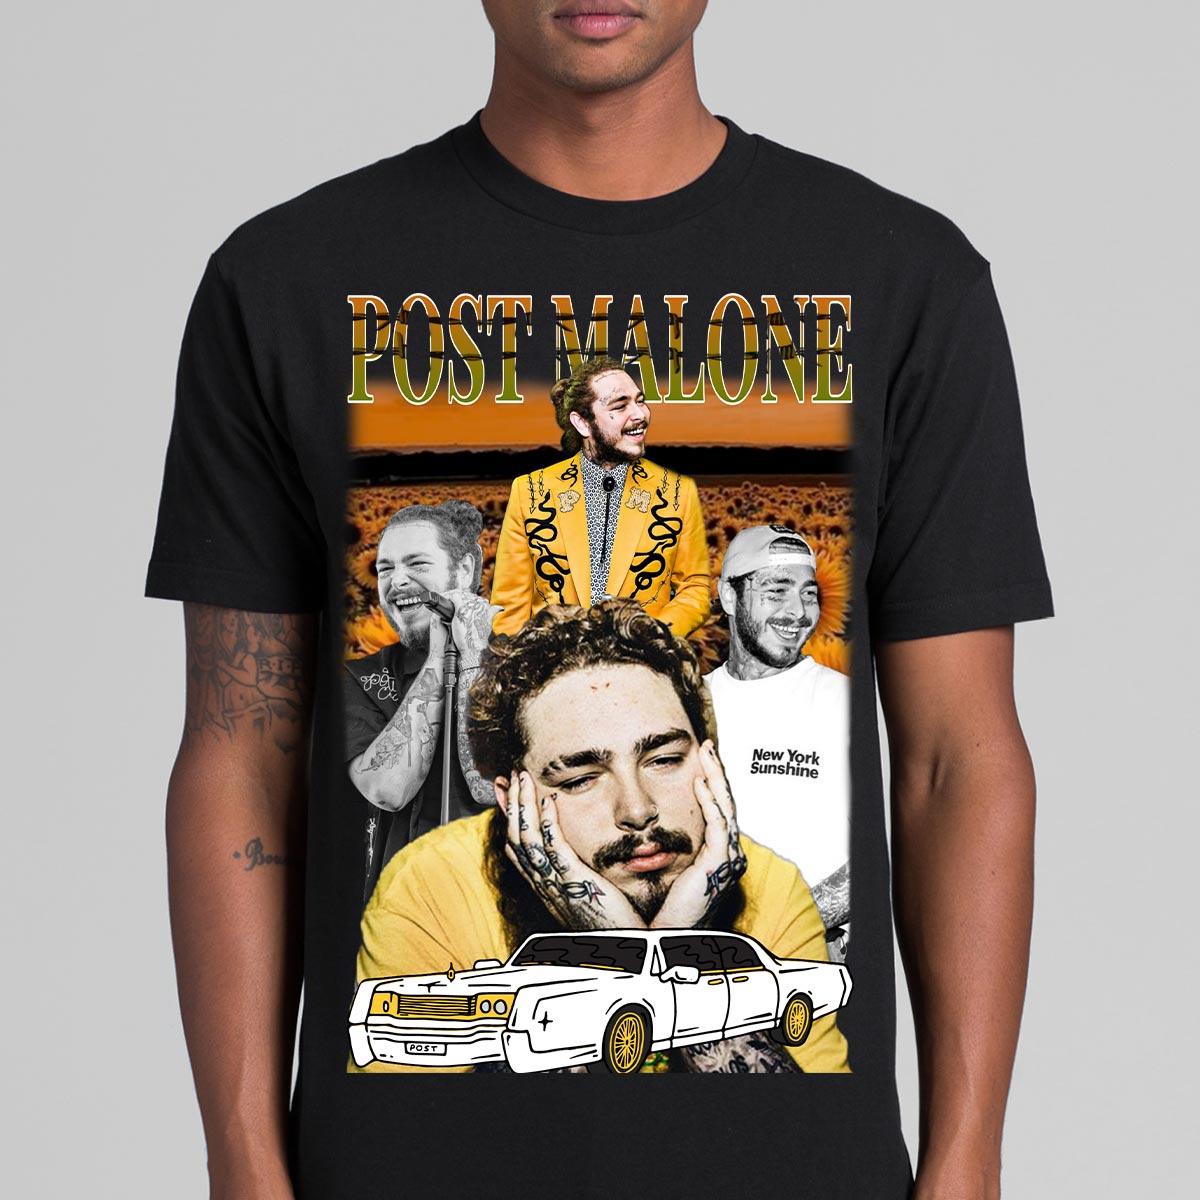 Post Malone T-Shirt Artist Family Fan Music Pop Culture